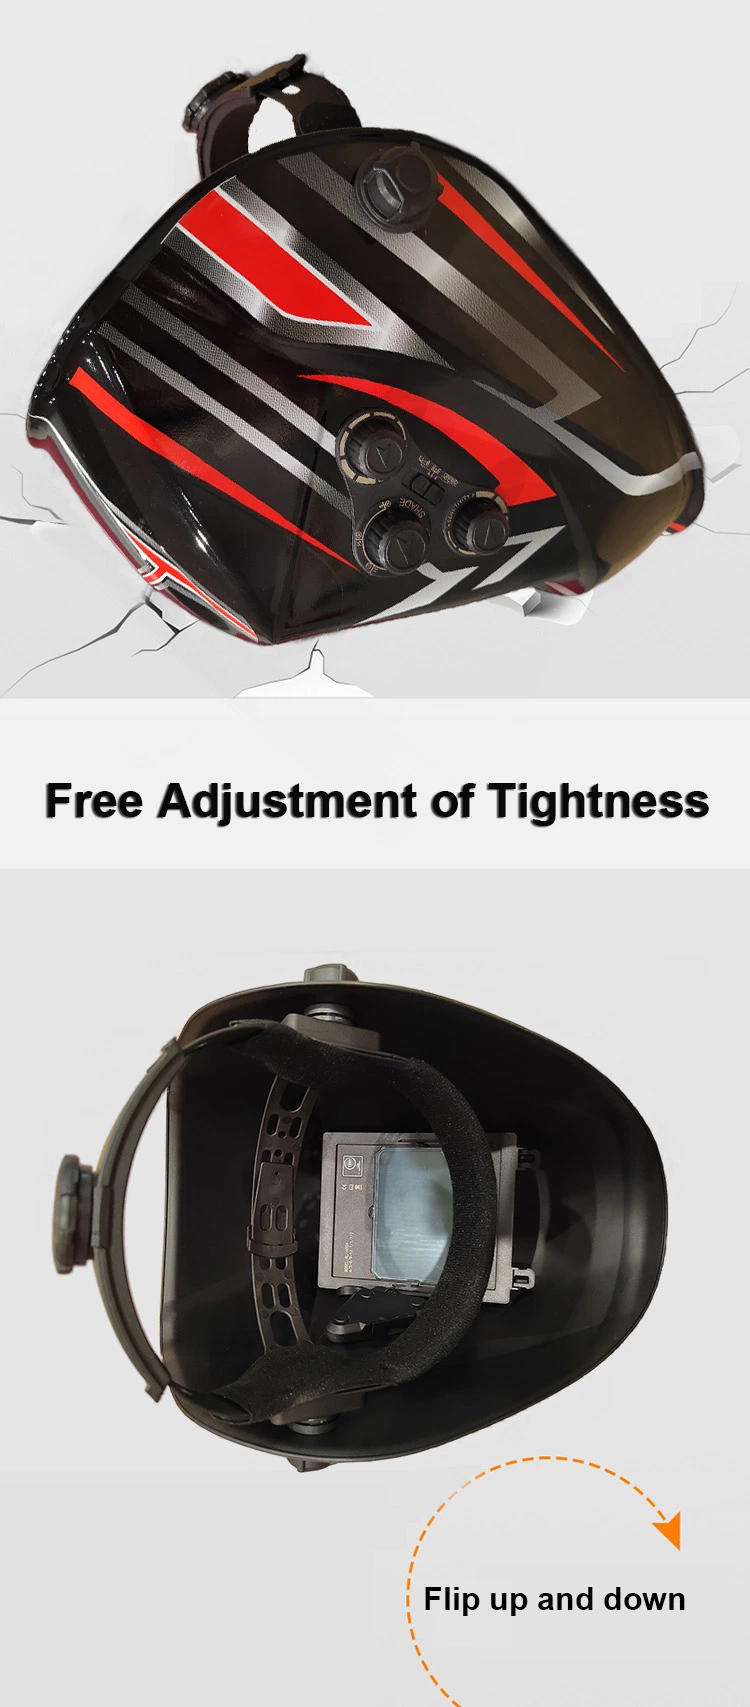 Rhk Tech Custom Stickers Automatic Caretas Electronica PARA Soldar Solar Auto Darkening MIG TIG Cutting Welding Helmet Decals